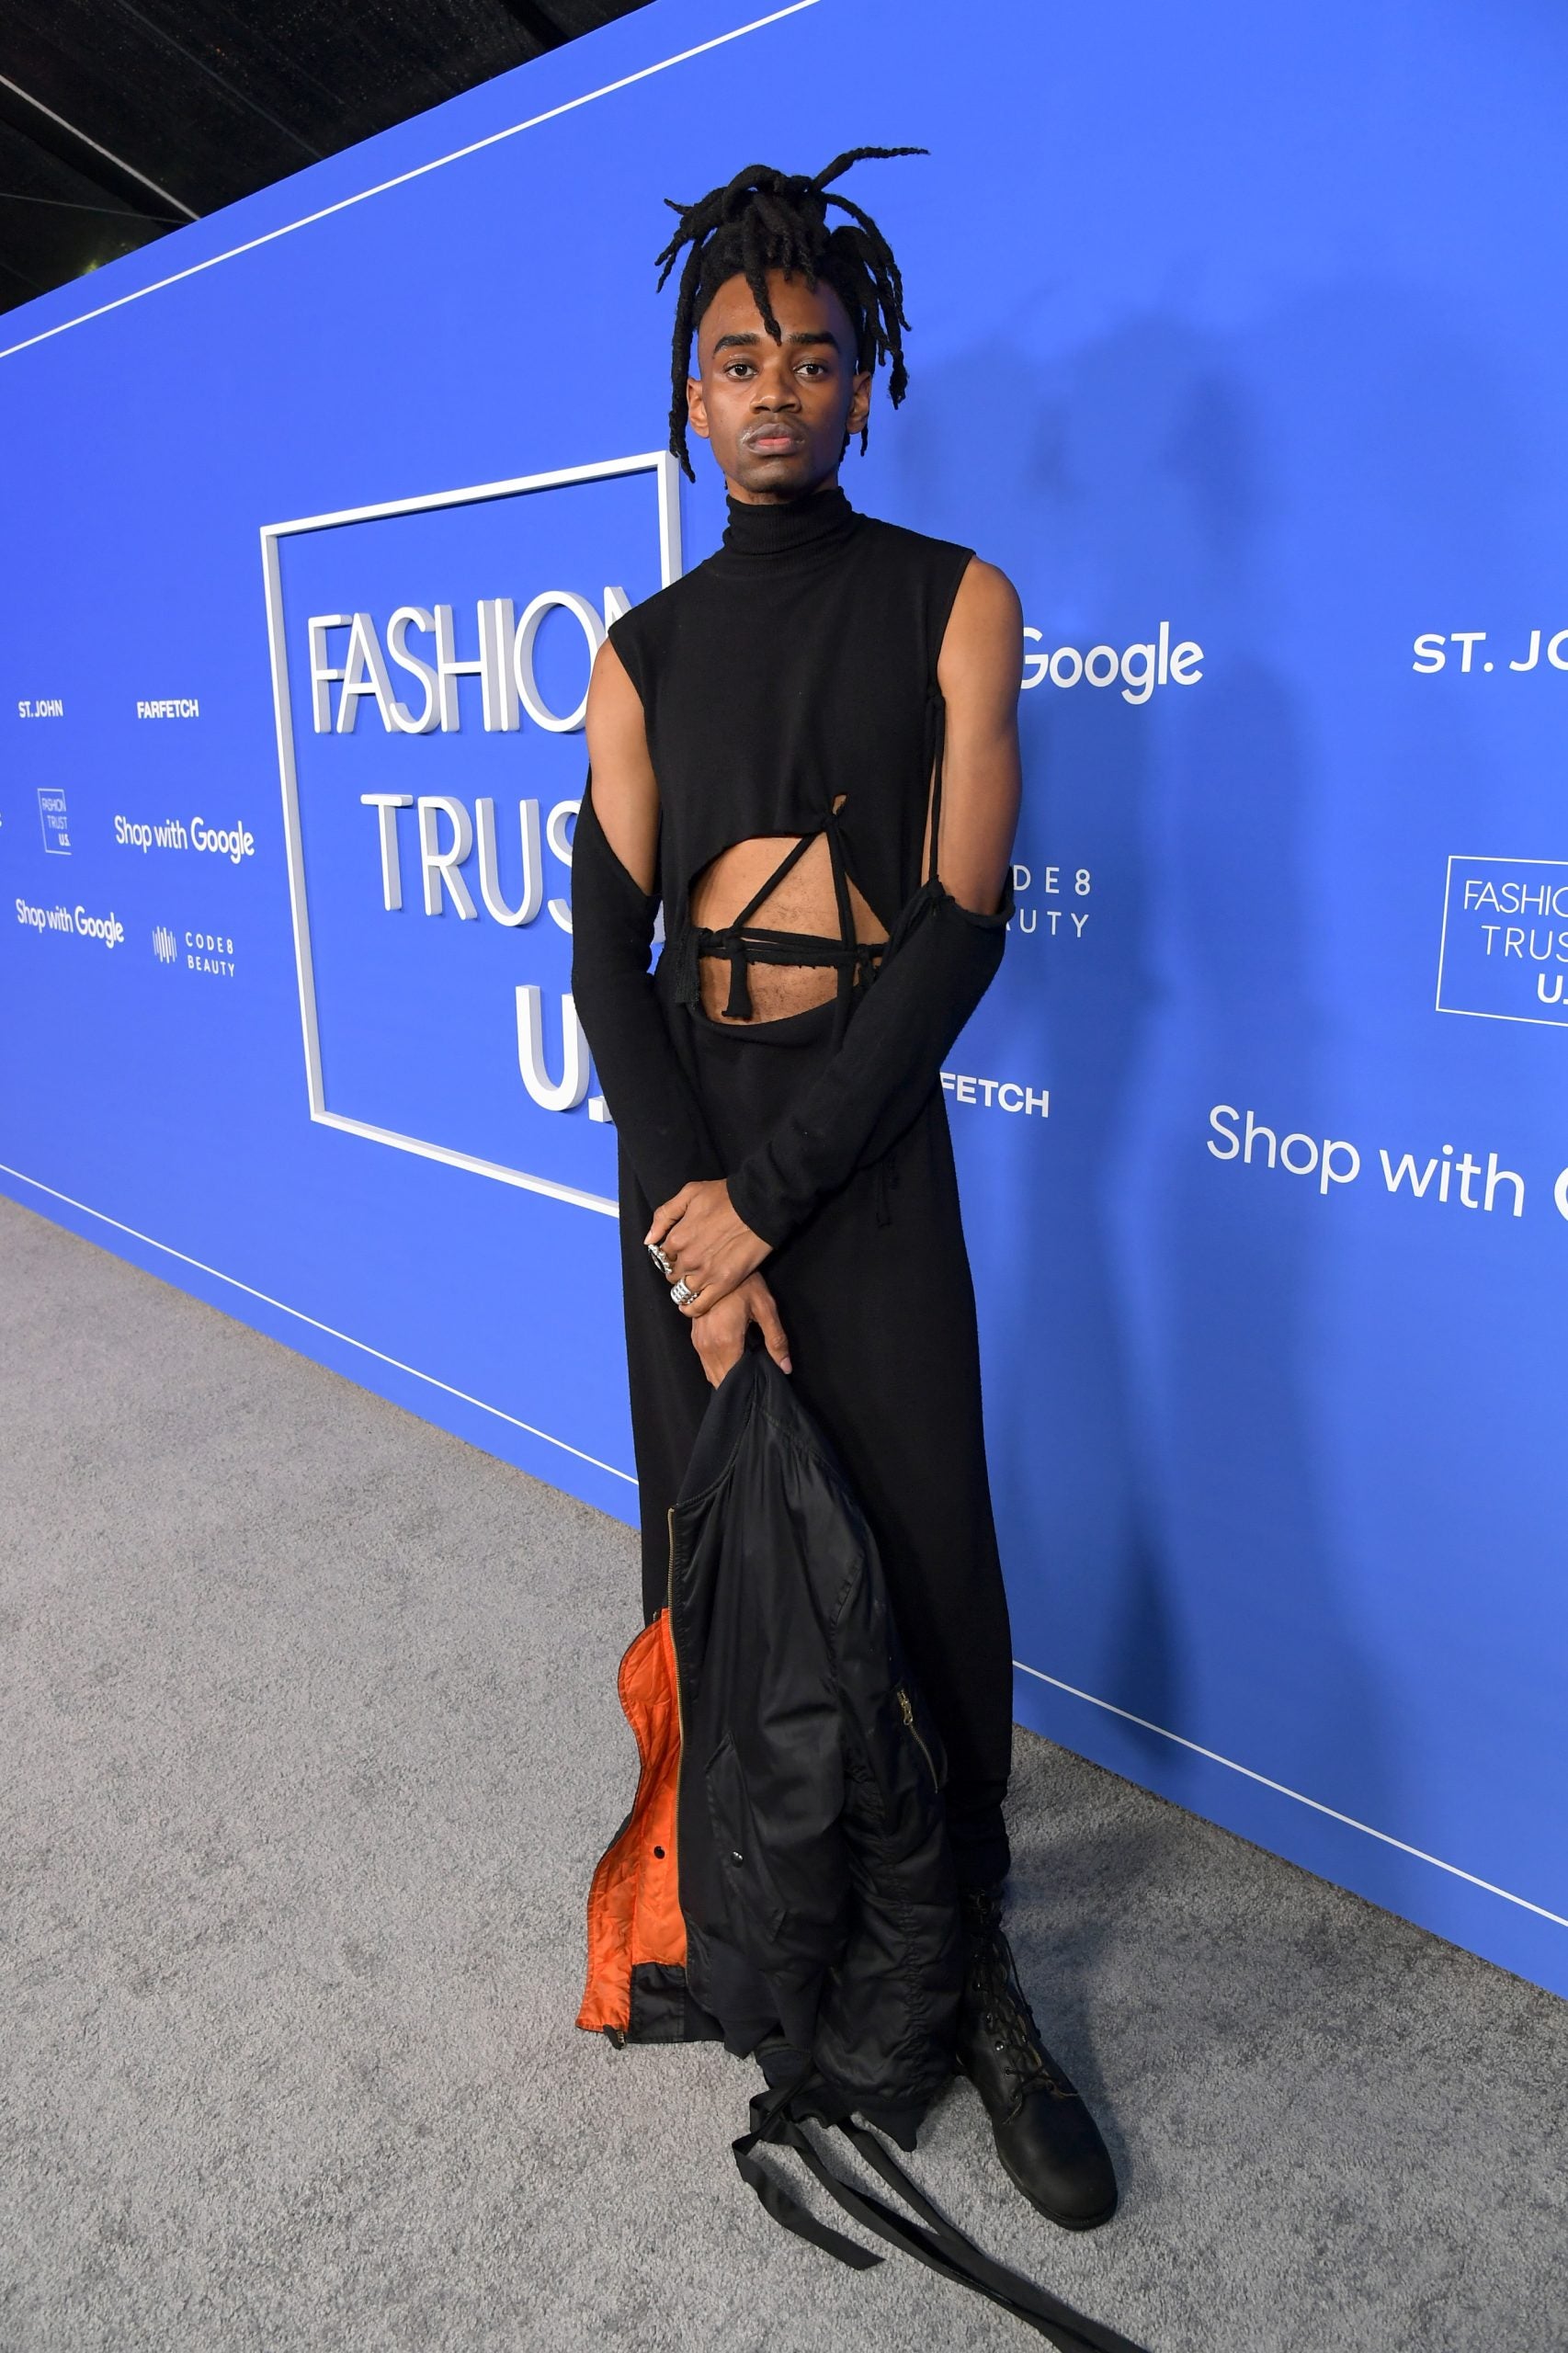 Tracee Ellis Ross, Ciara & More Celebrate Fashion’s Emerging Talent At Fashion Trust US Awards